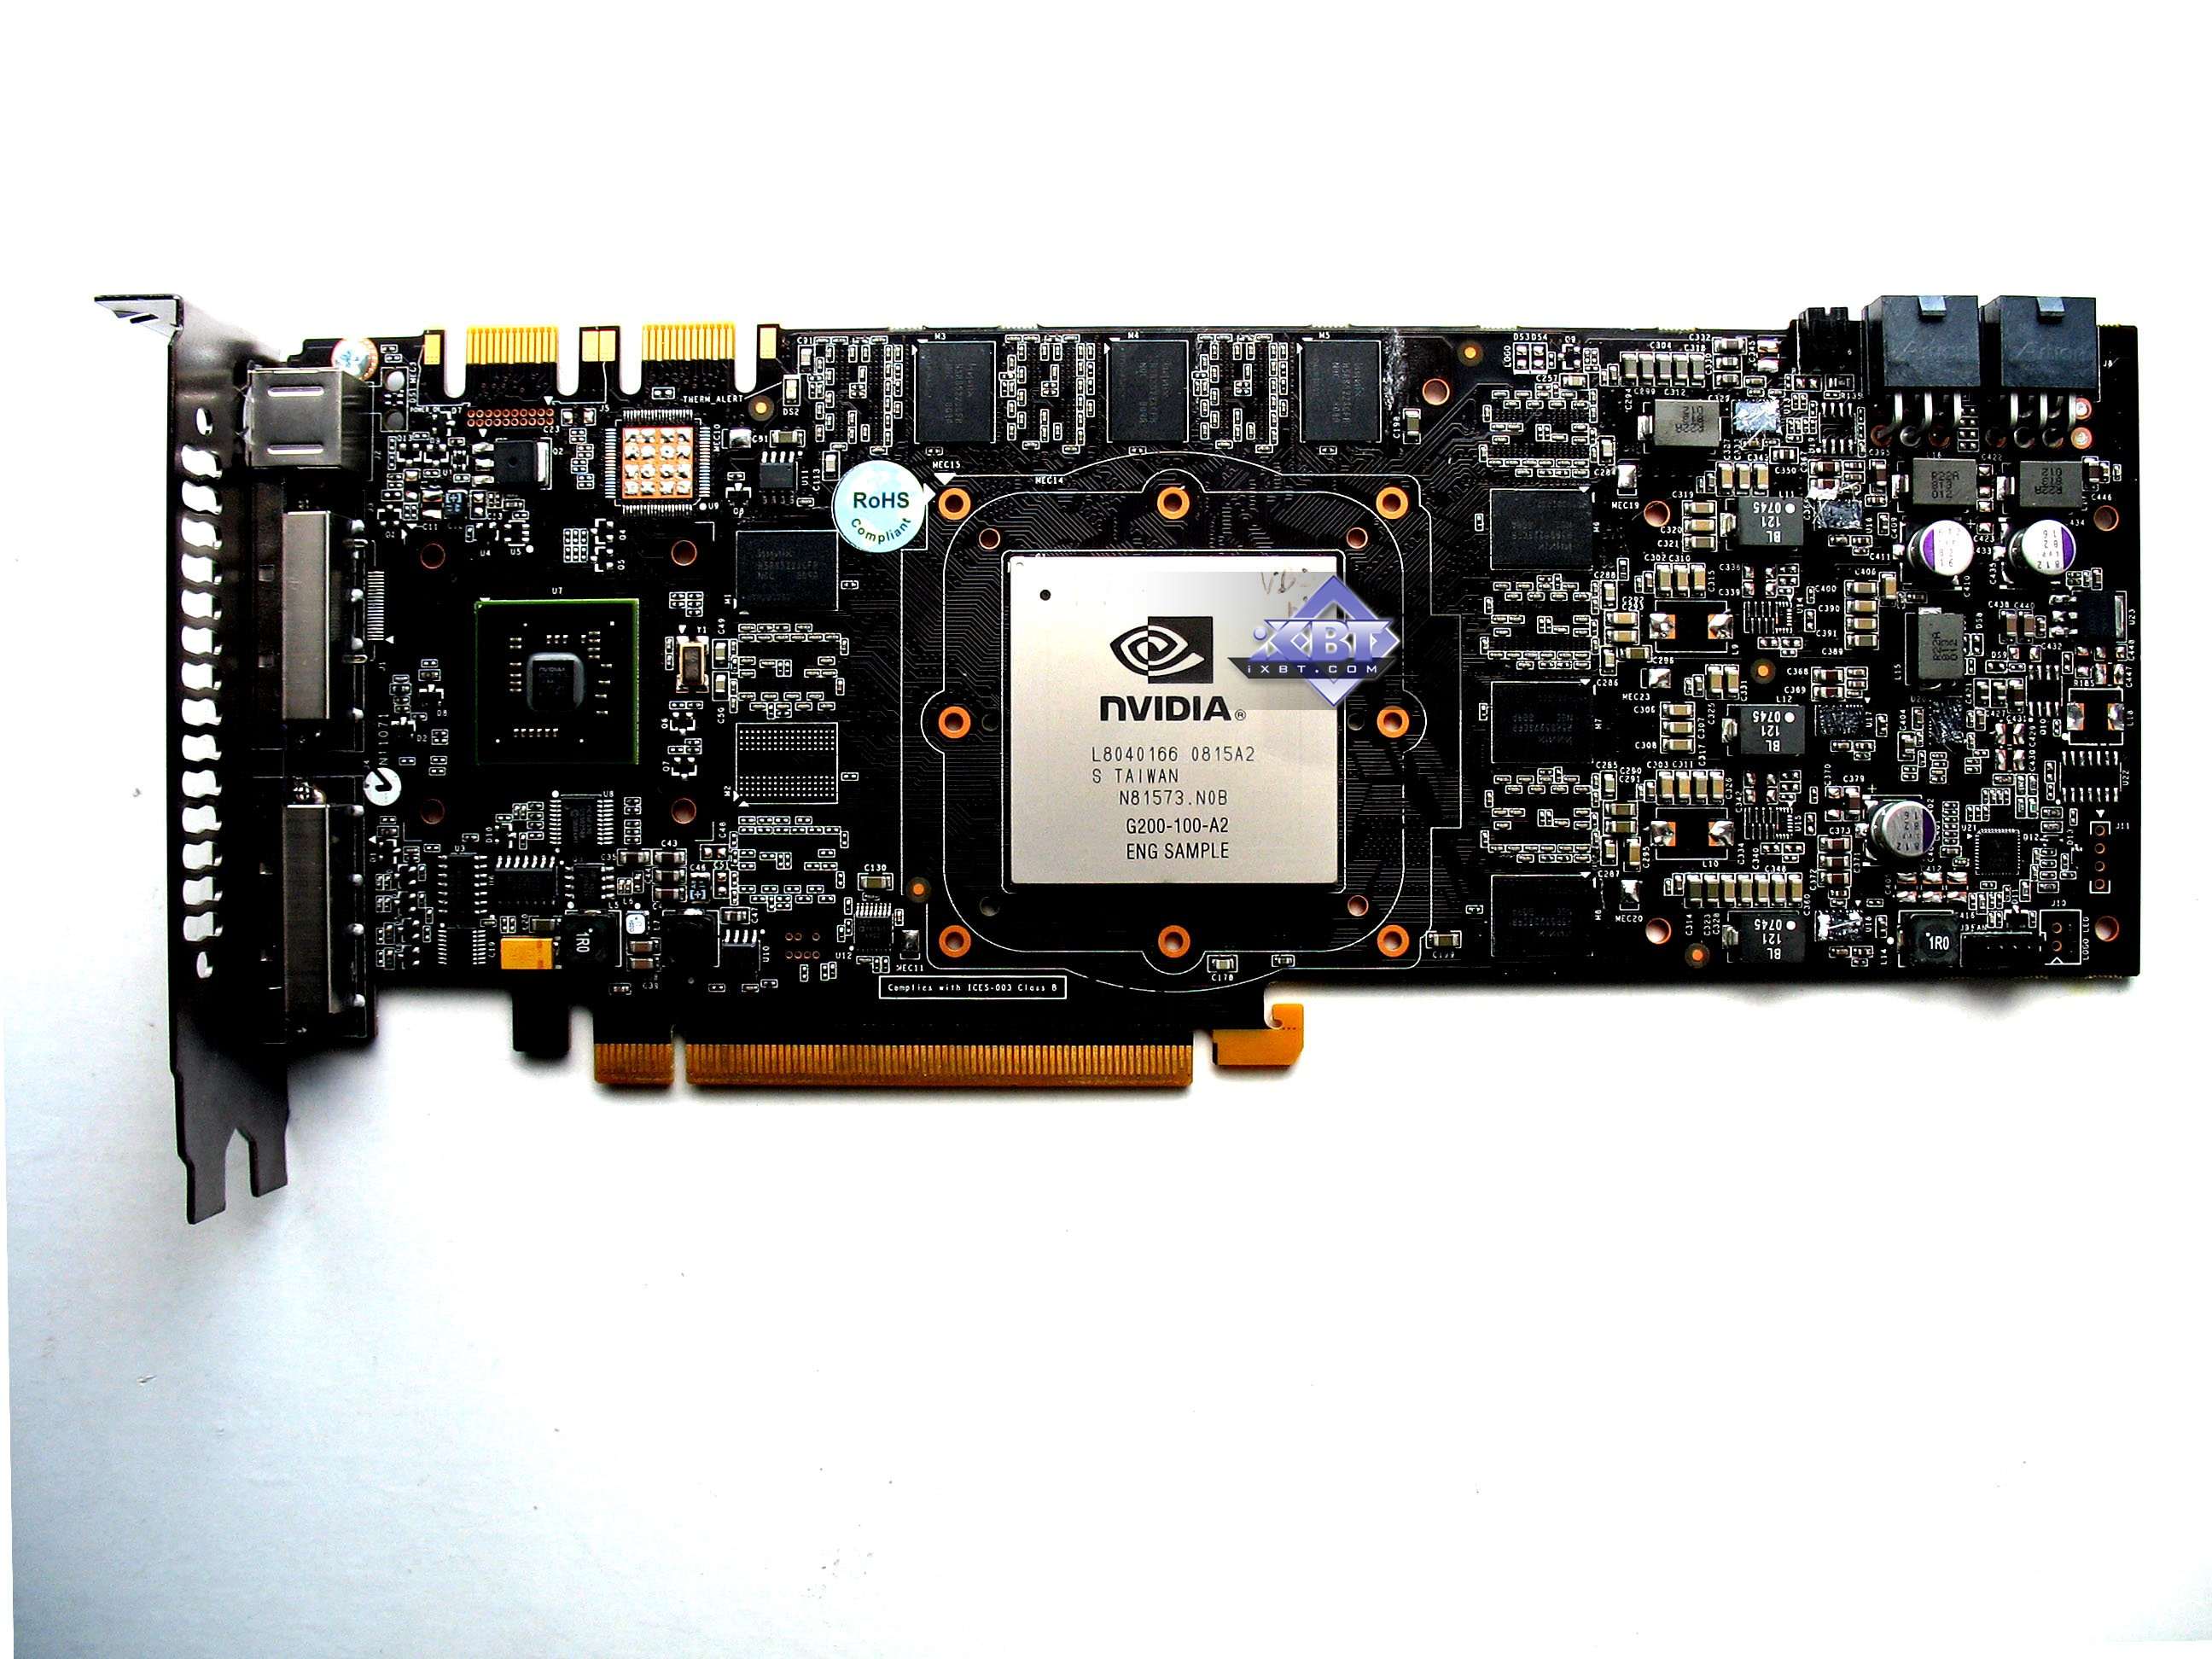 iXBT Labs - NVIDIA GeForce GTX 260 